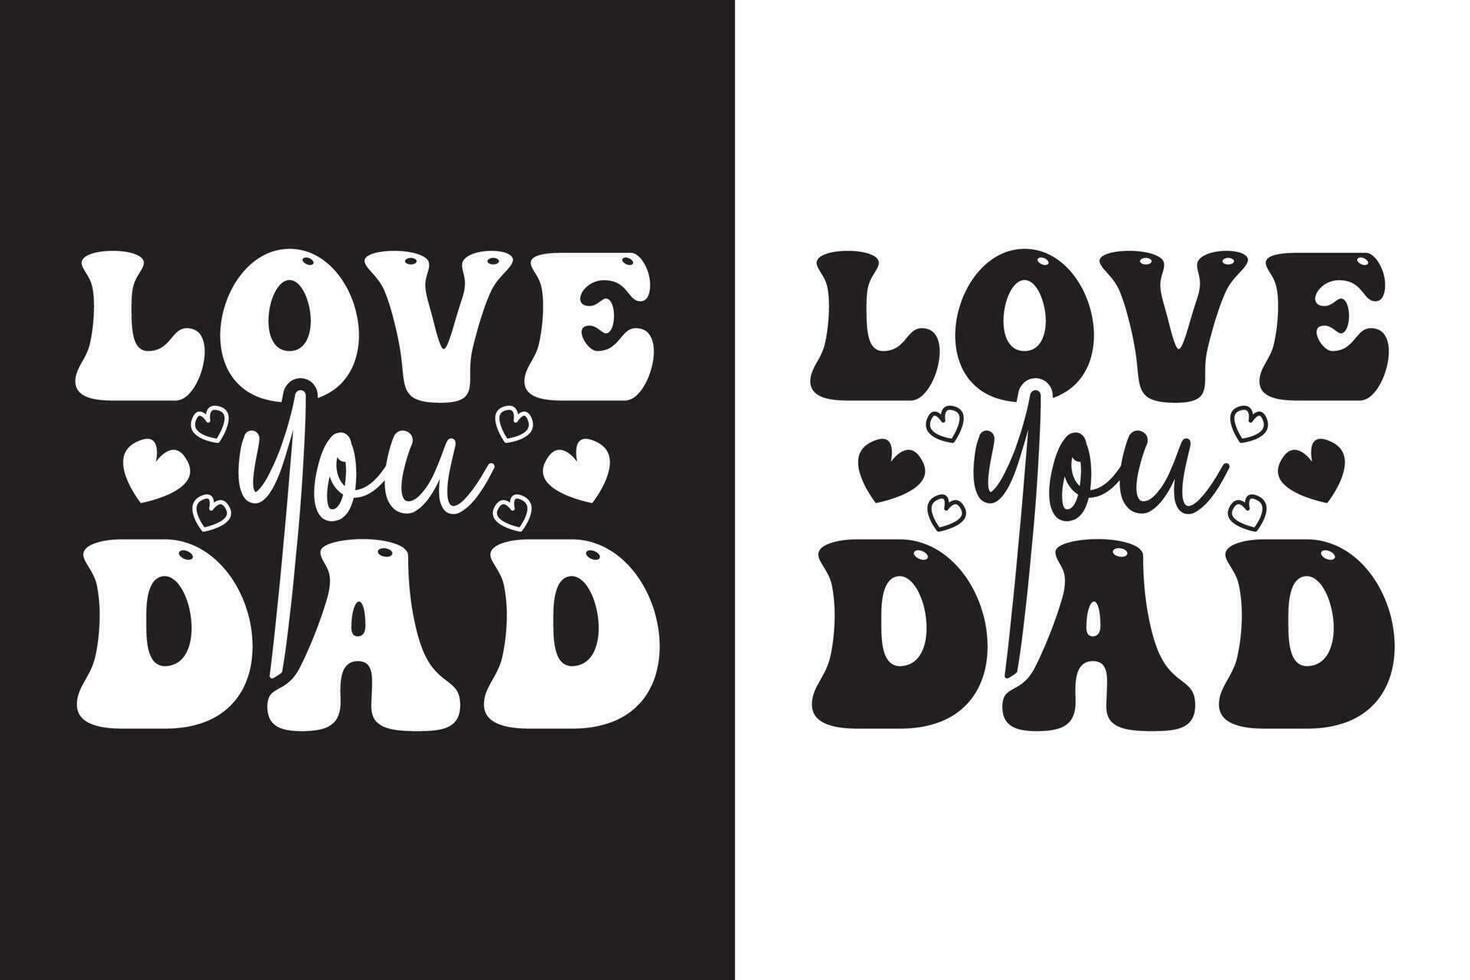 Love you Dad - Vector Typography Design